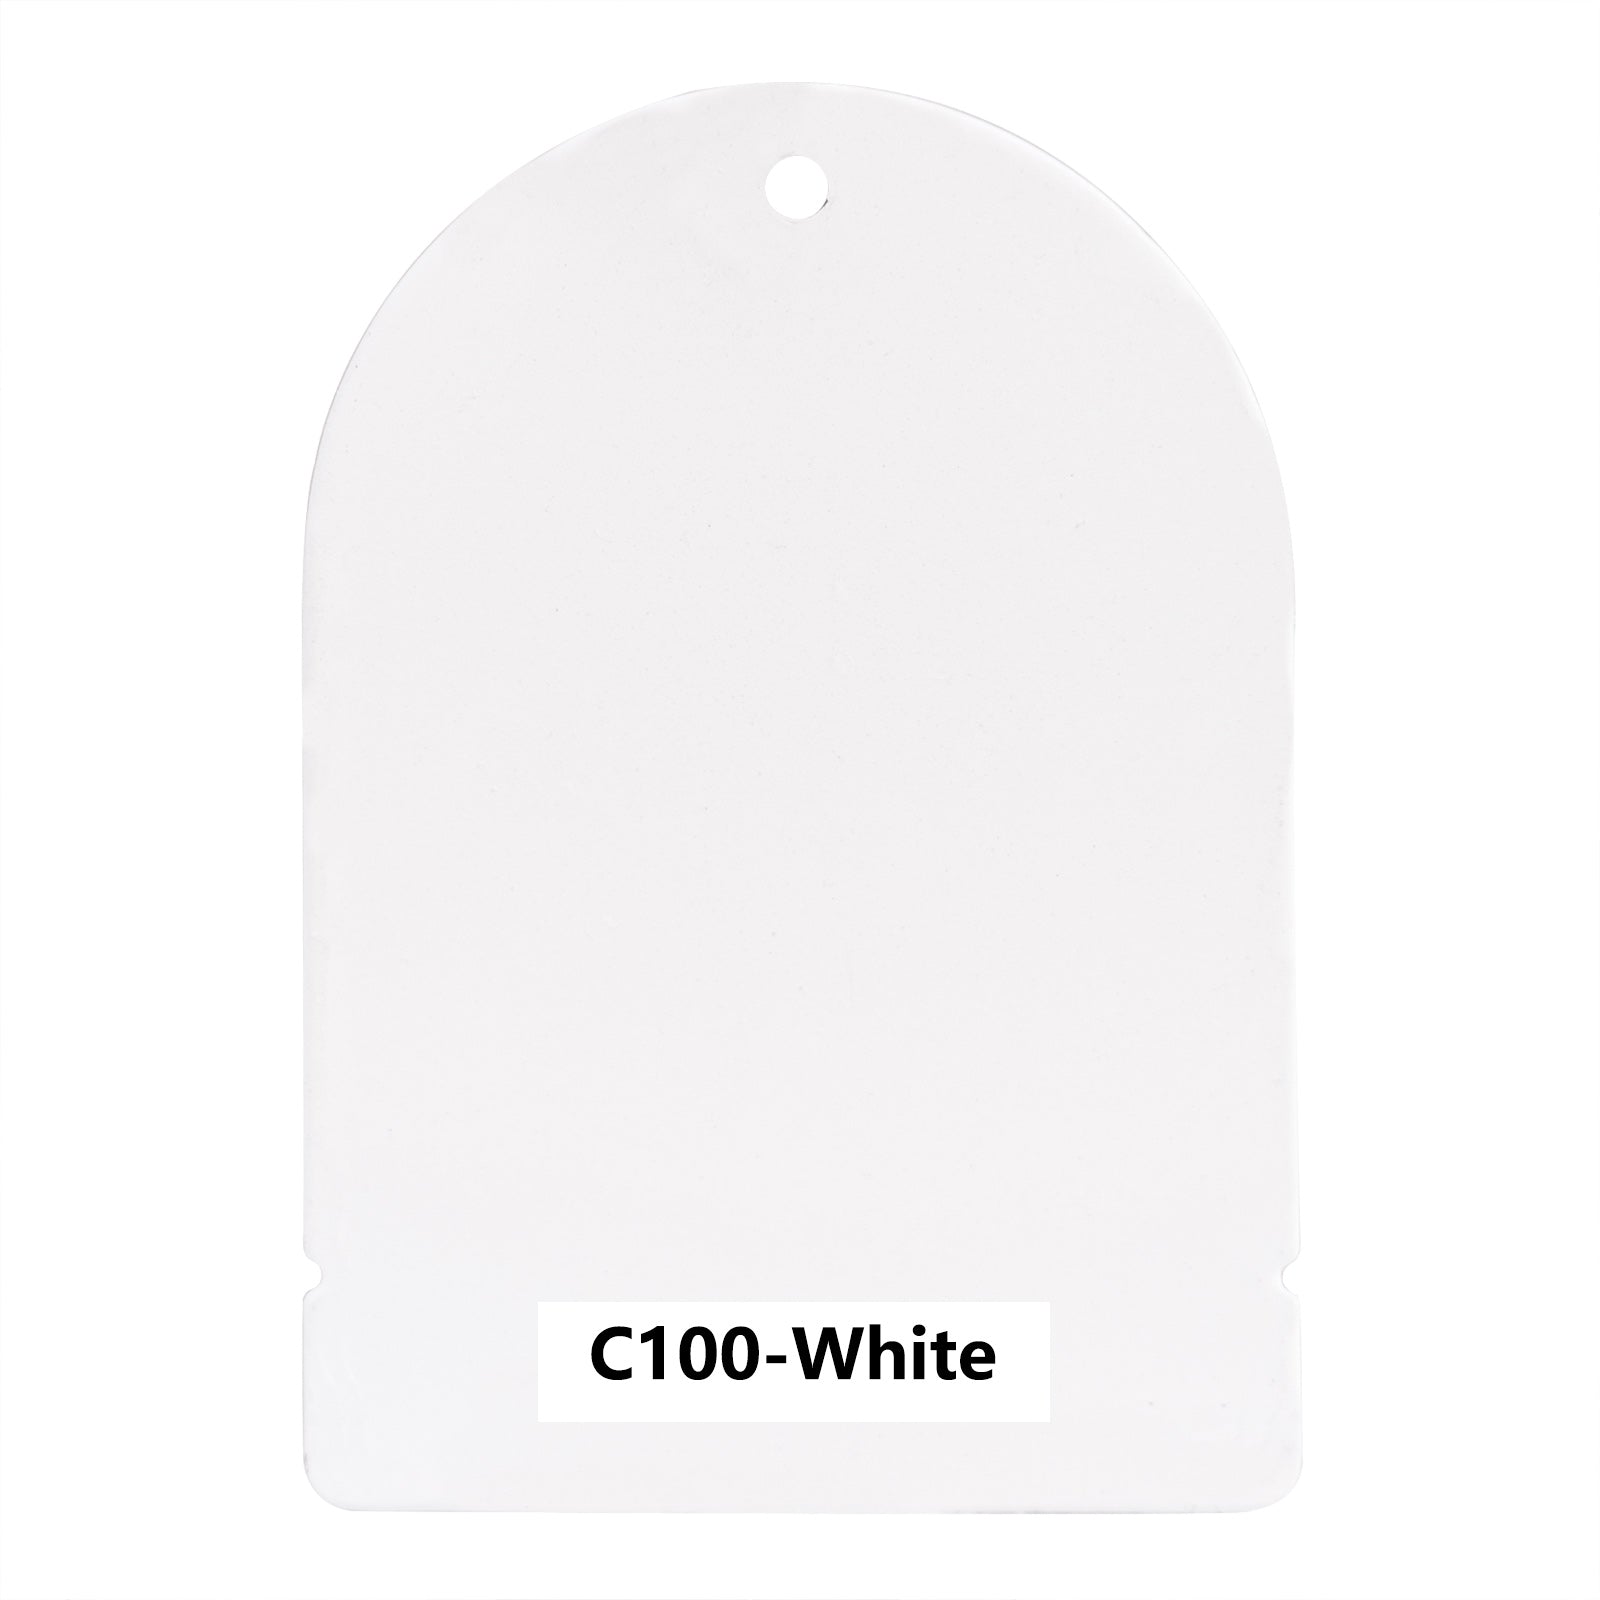 White iron doors color finish sample